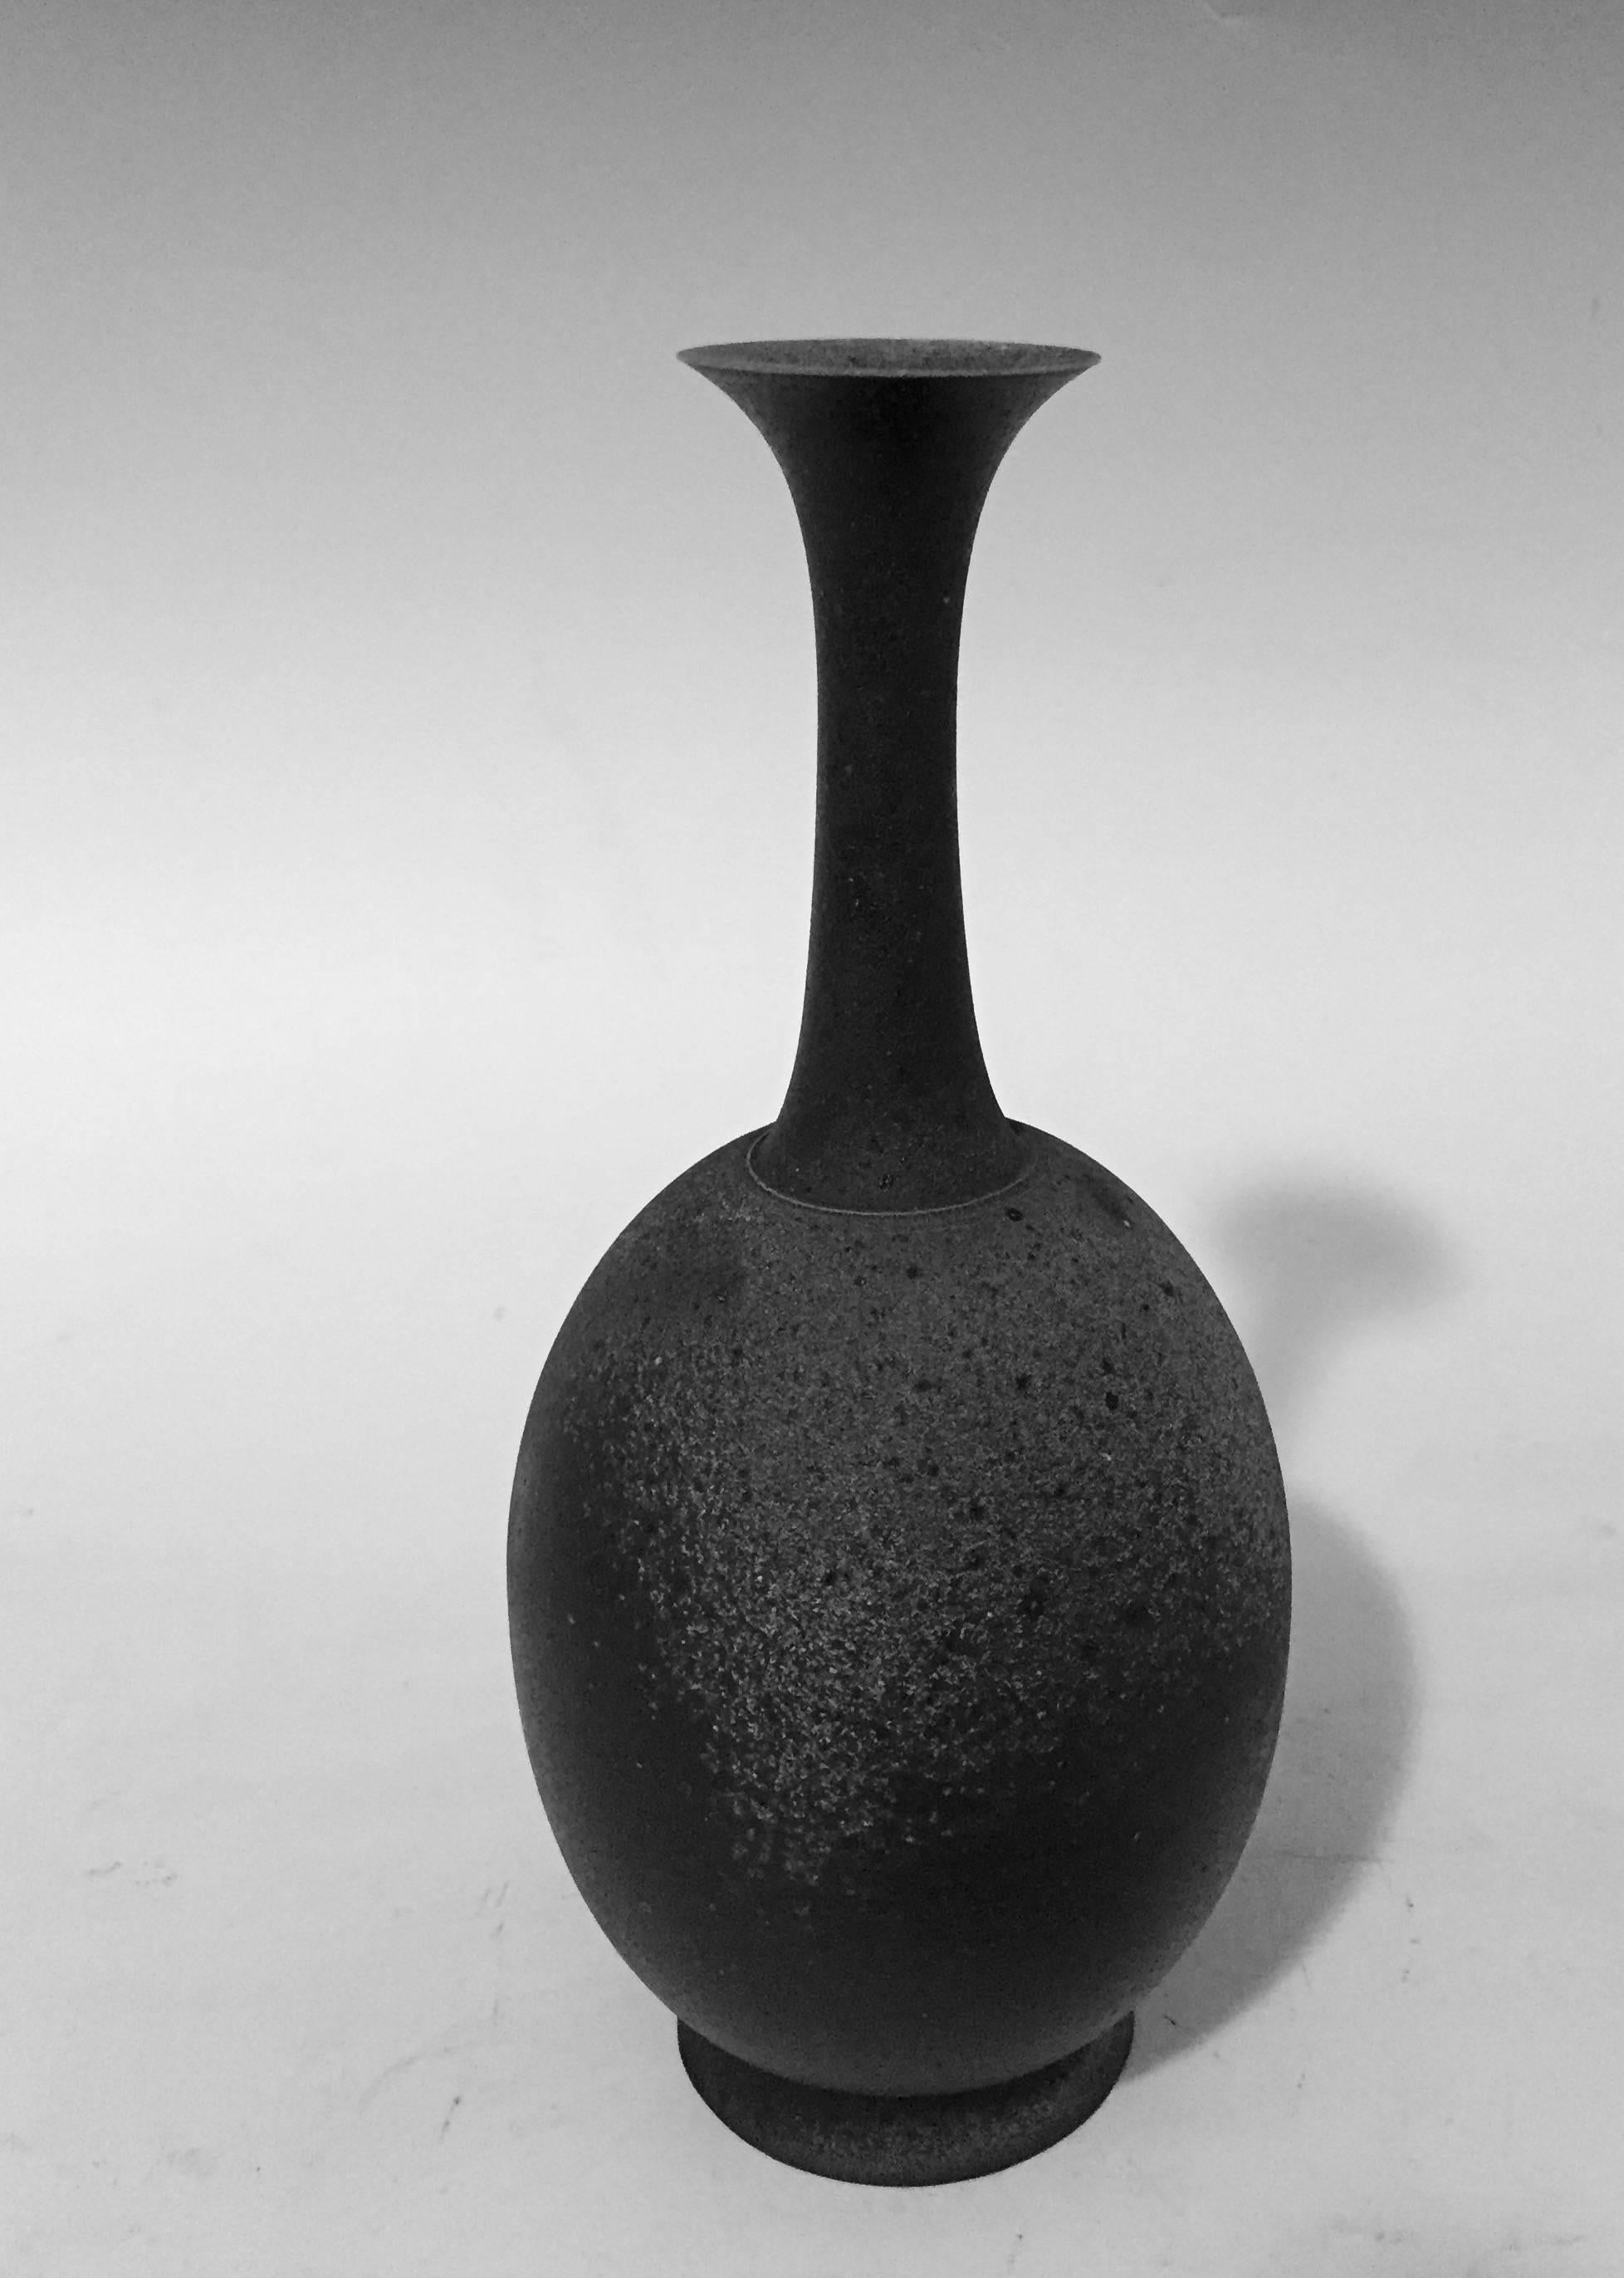 Contemporary Stoneware Vase by Japanese Ceramicist Koji Toda 1